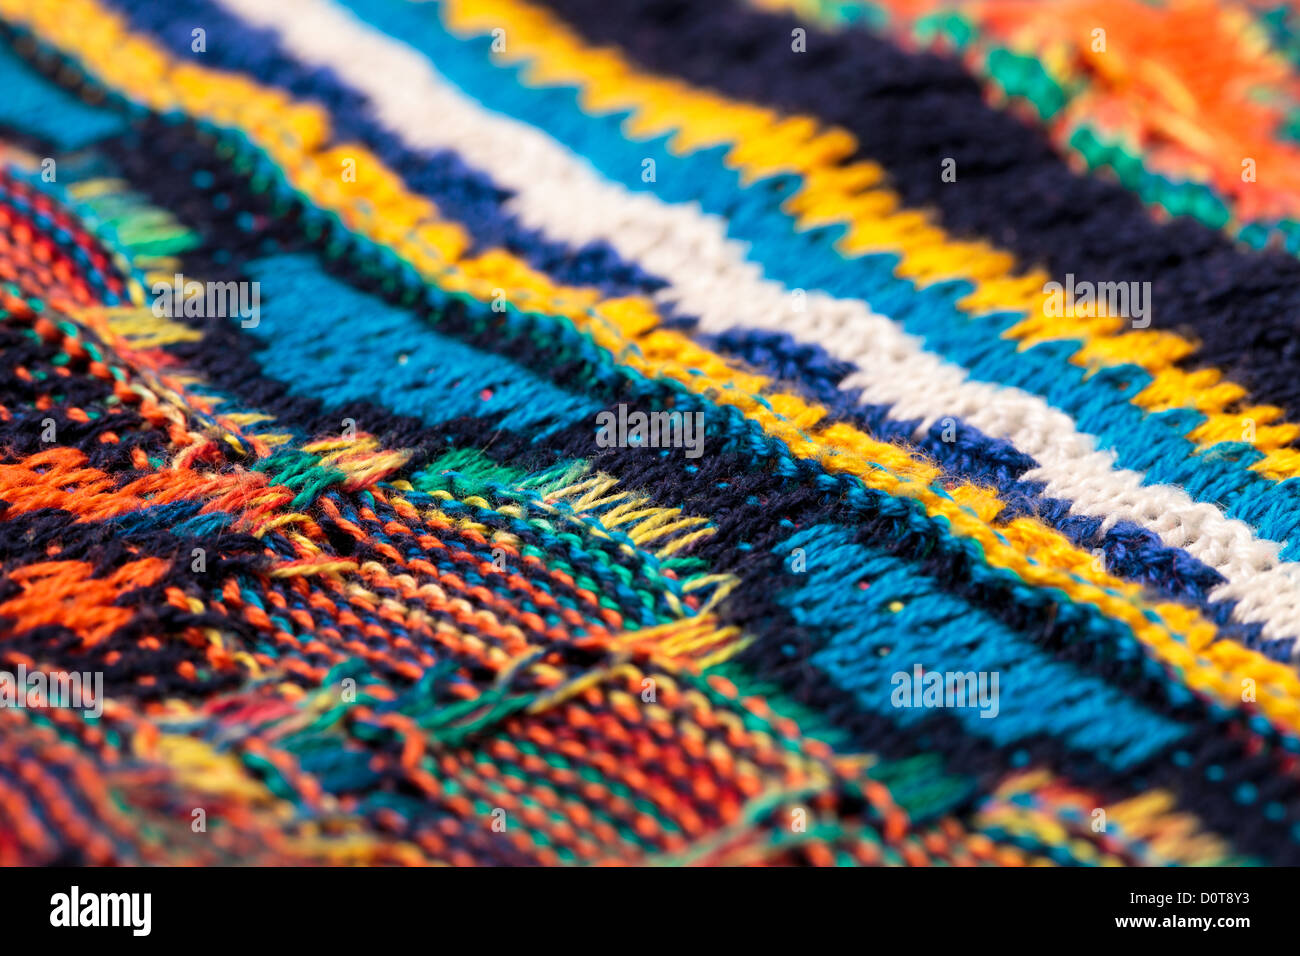 Bunte Pullover stricken Textur Stockfotografie - Alamy